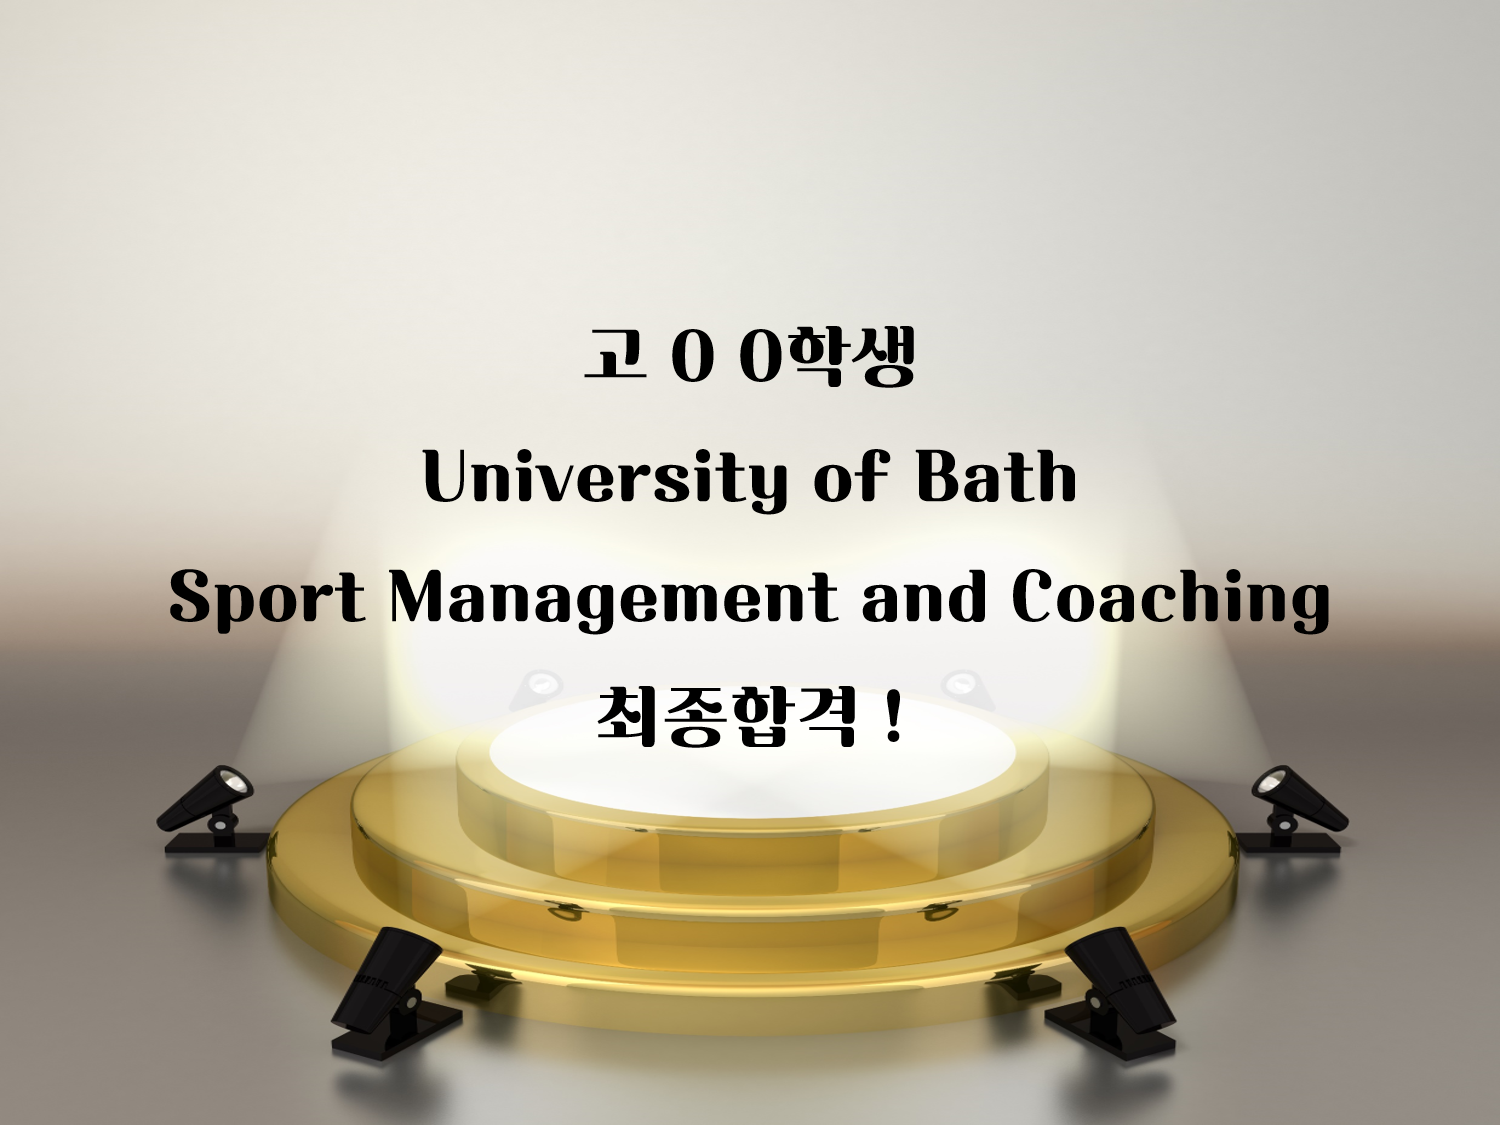 University of Bath: Sport Management and Coaching